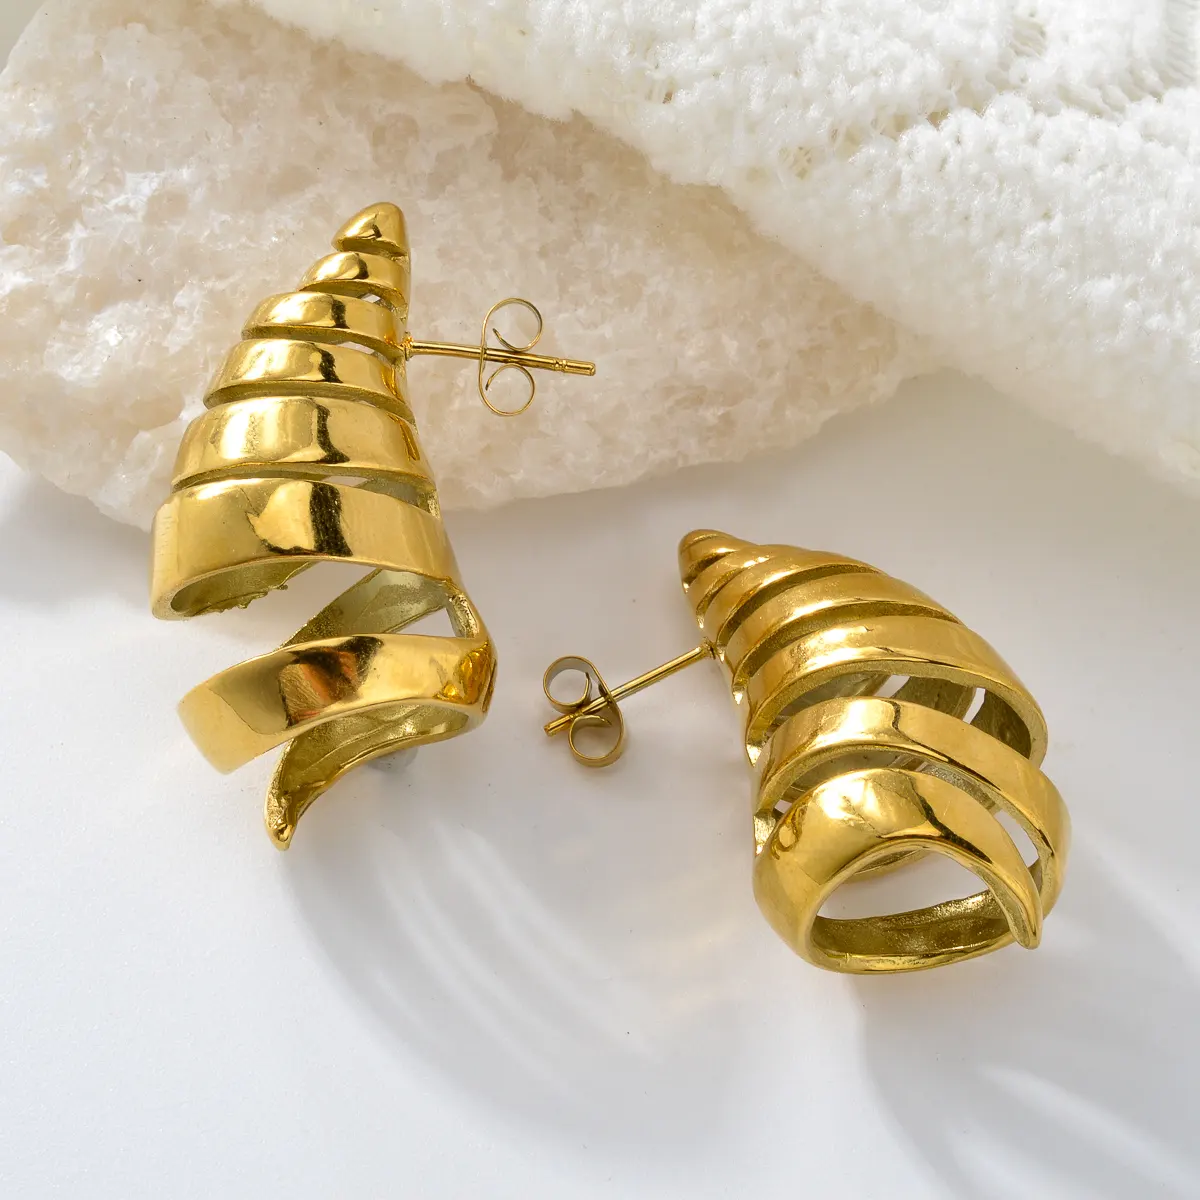 NEW Arrived 18k Gold Plated Stainless Steel Non Tarnish Waterproof Water Drop Earrings Women